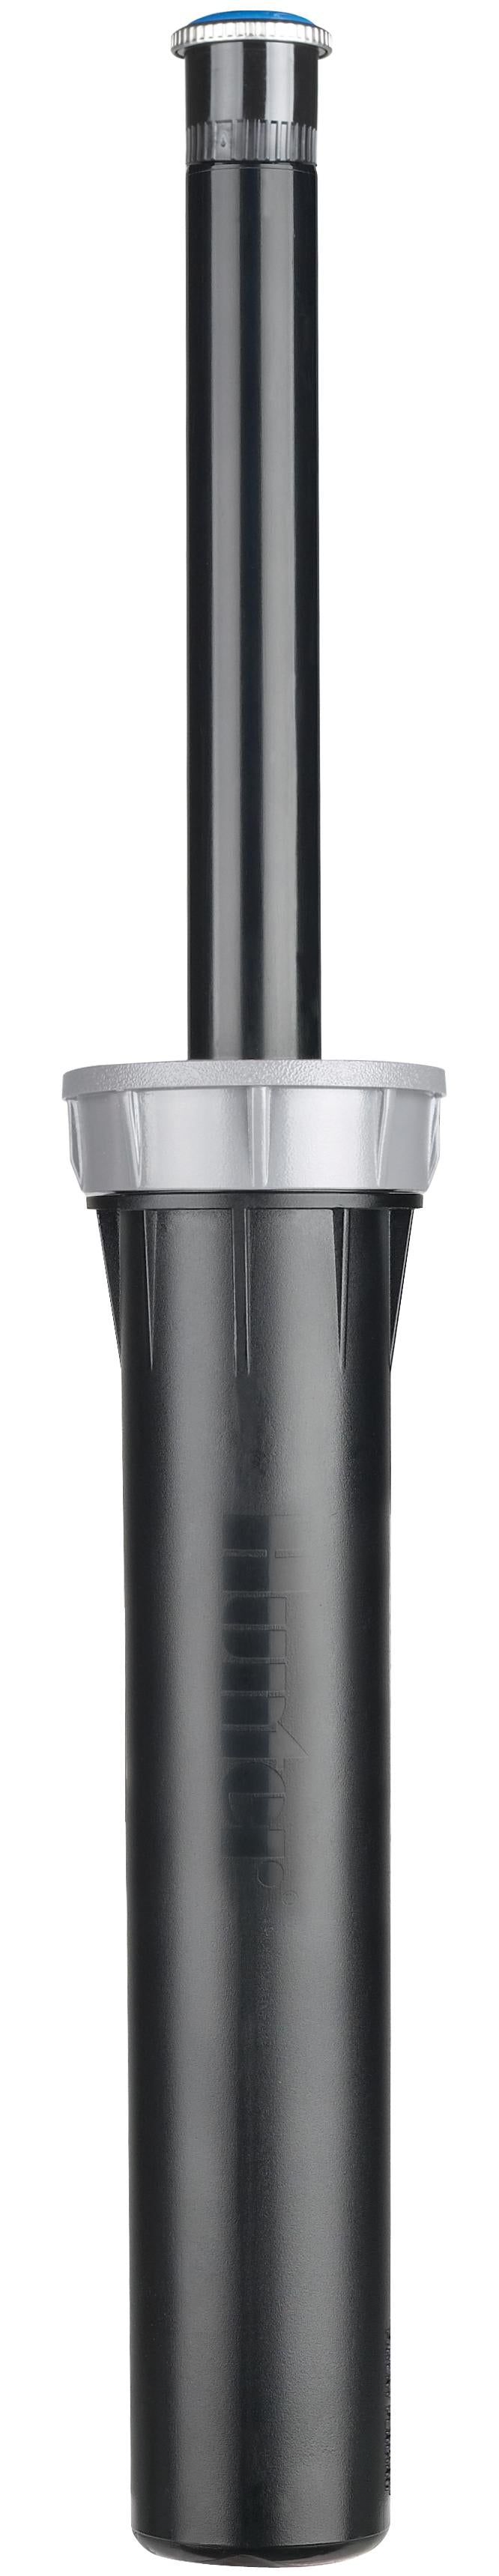 Hunter Industries PROS06PRS40CVF Pro-Spray Sprinkler Body, 15 cm pop-up with 2.8 bar pressure regulator